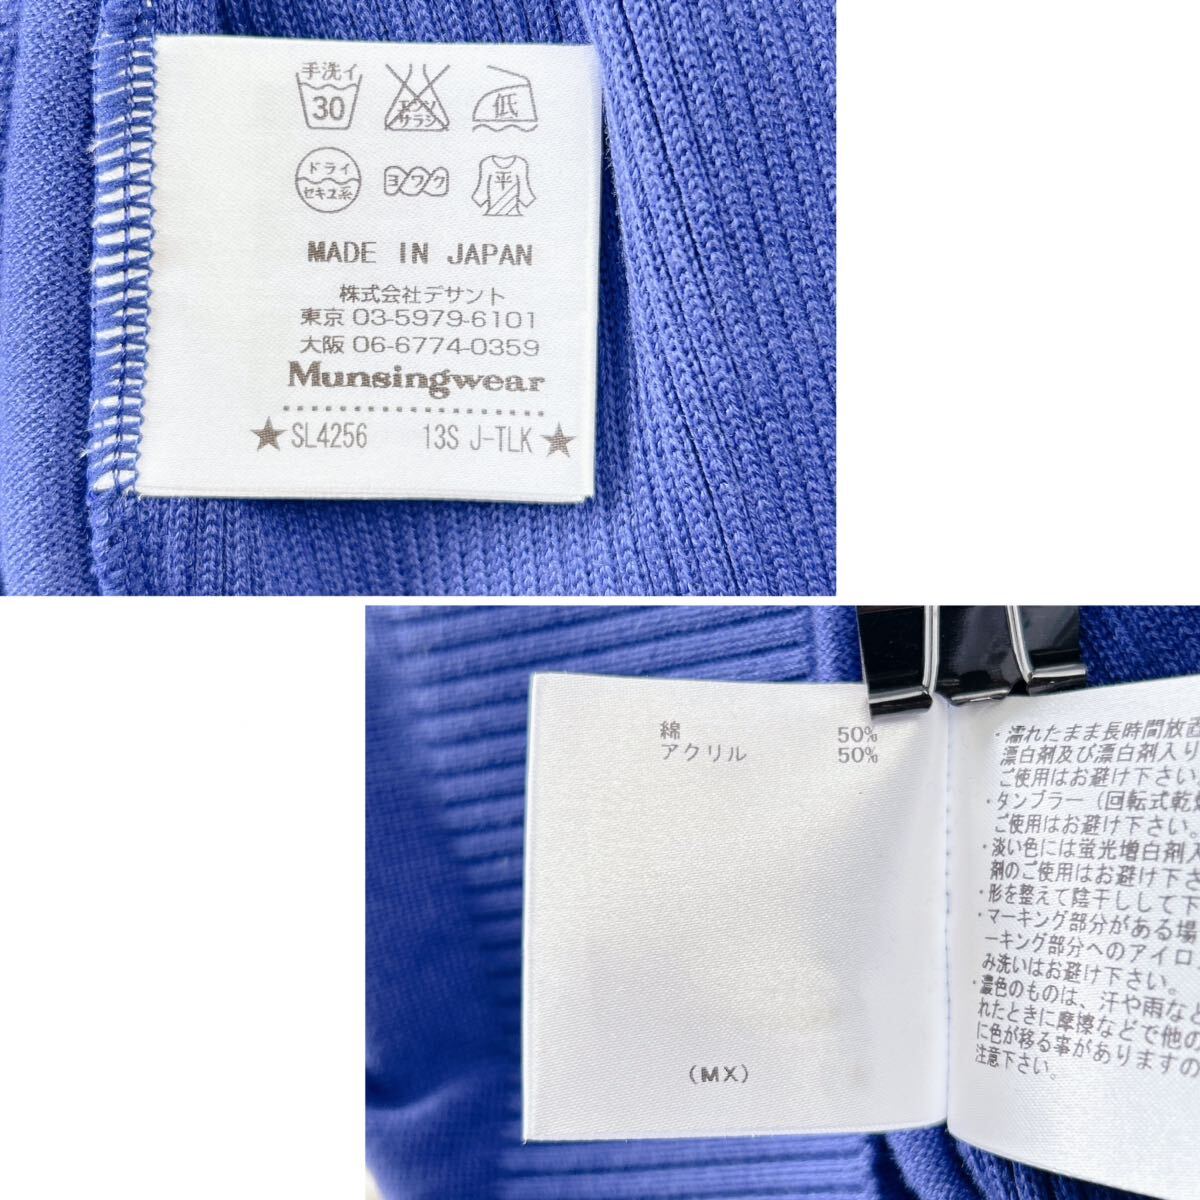  Munsingwear/マンシングウェア 美品 ニットセーター サマーニット ゴルフウェア GOLF 長袖 刺繍ロゴ クルーネック 青 レディース M_画像9